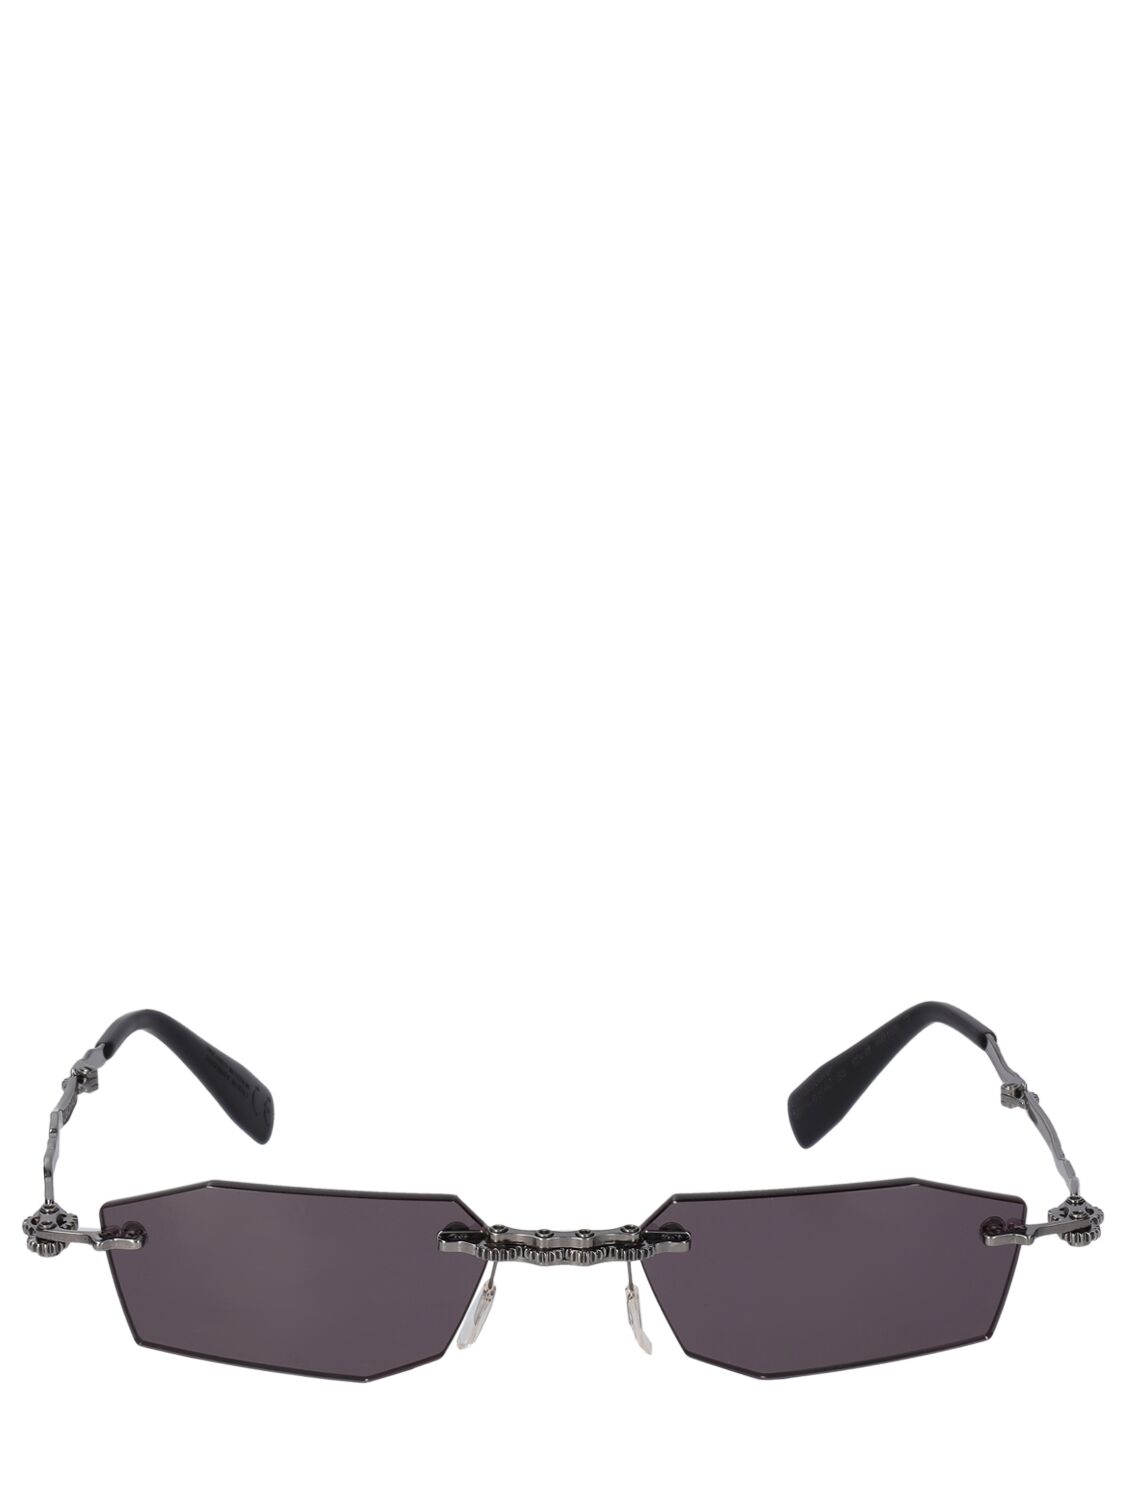 H40 Metal Machinery Rimless Sunglasses